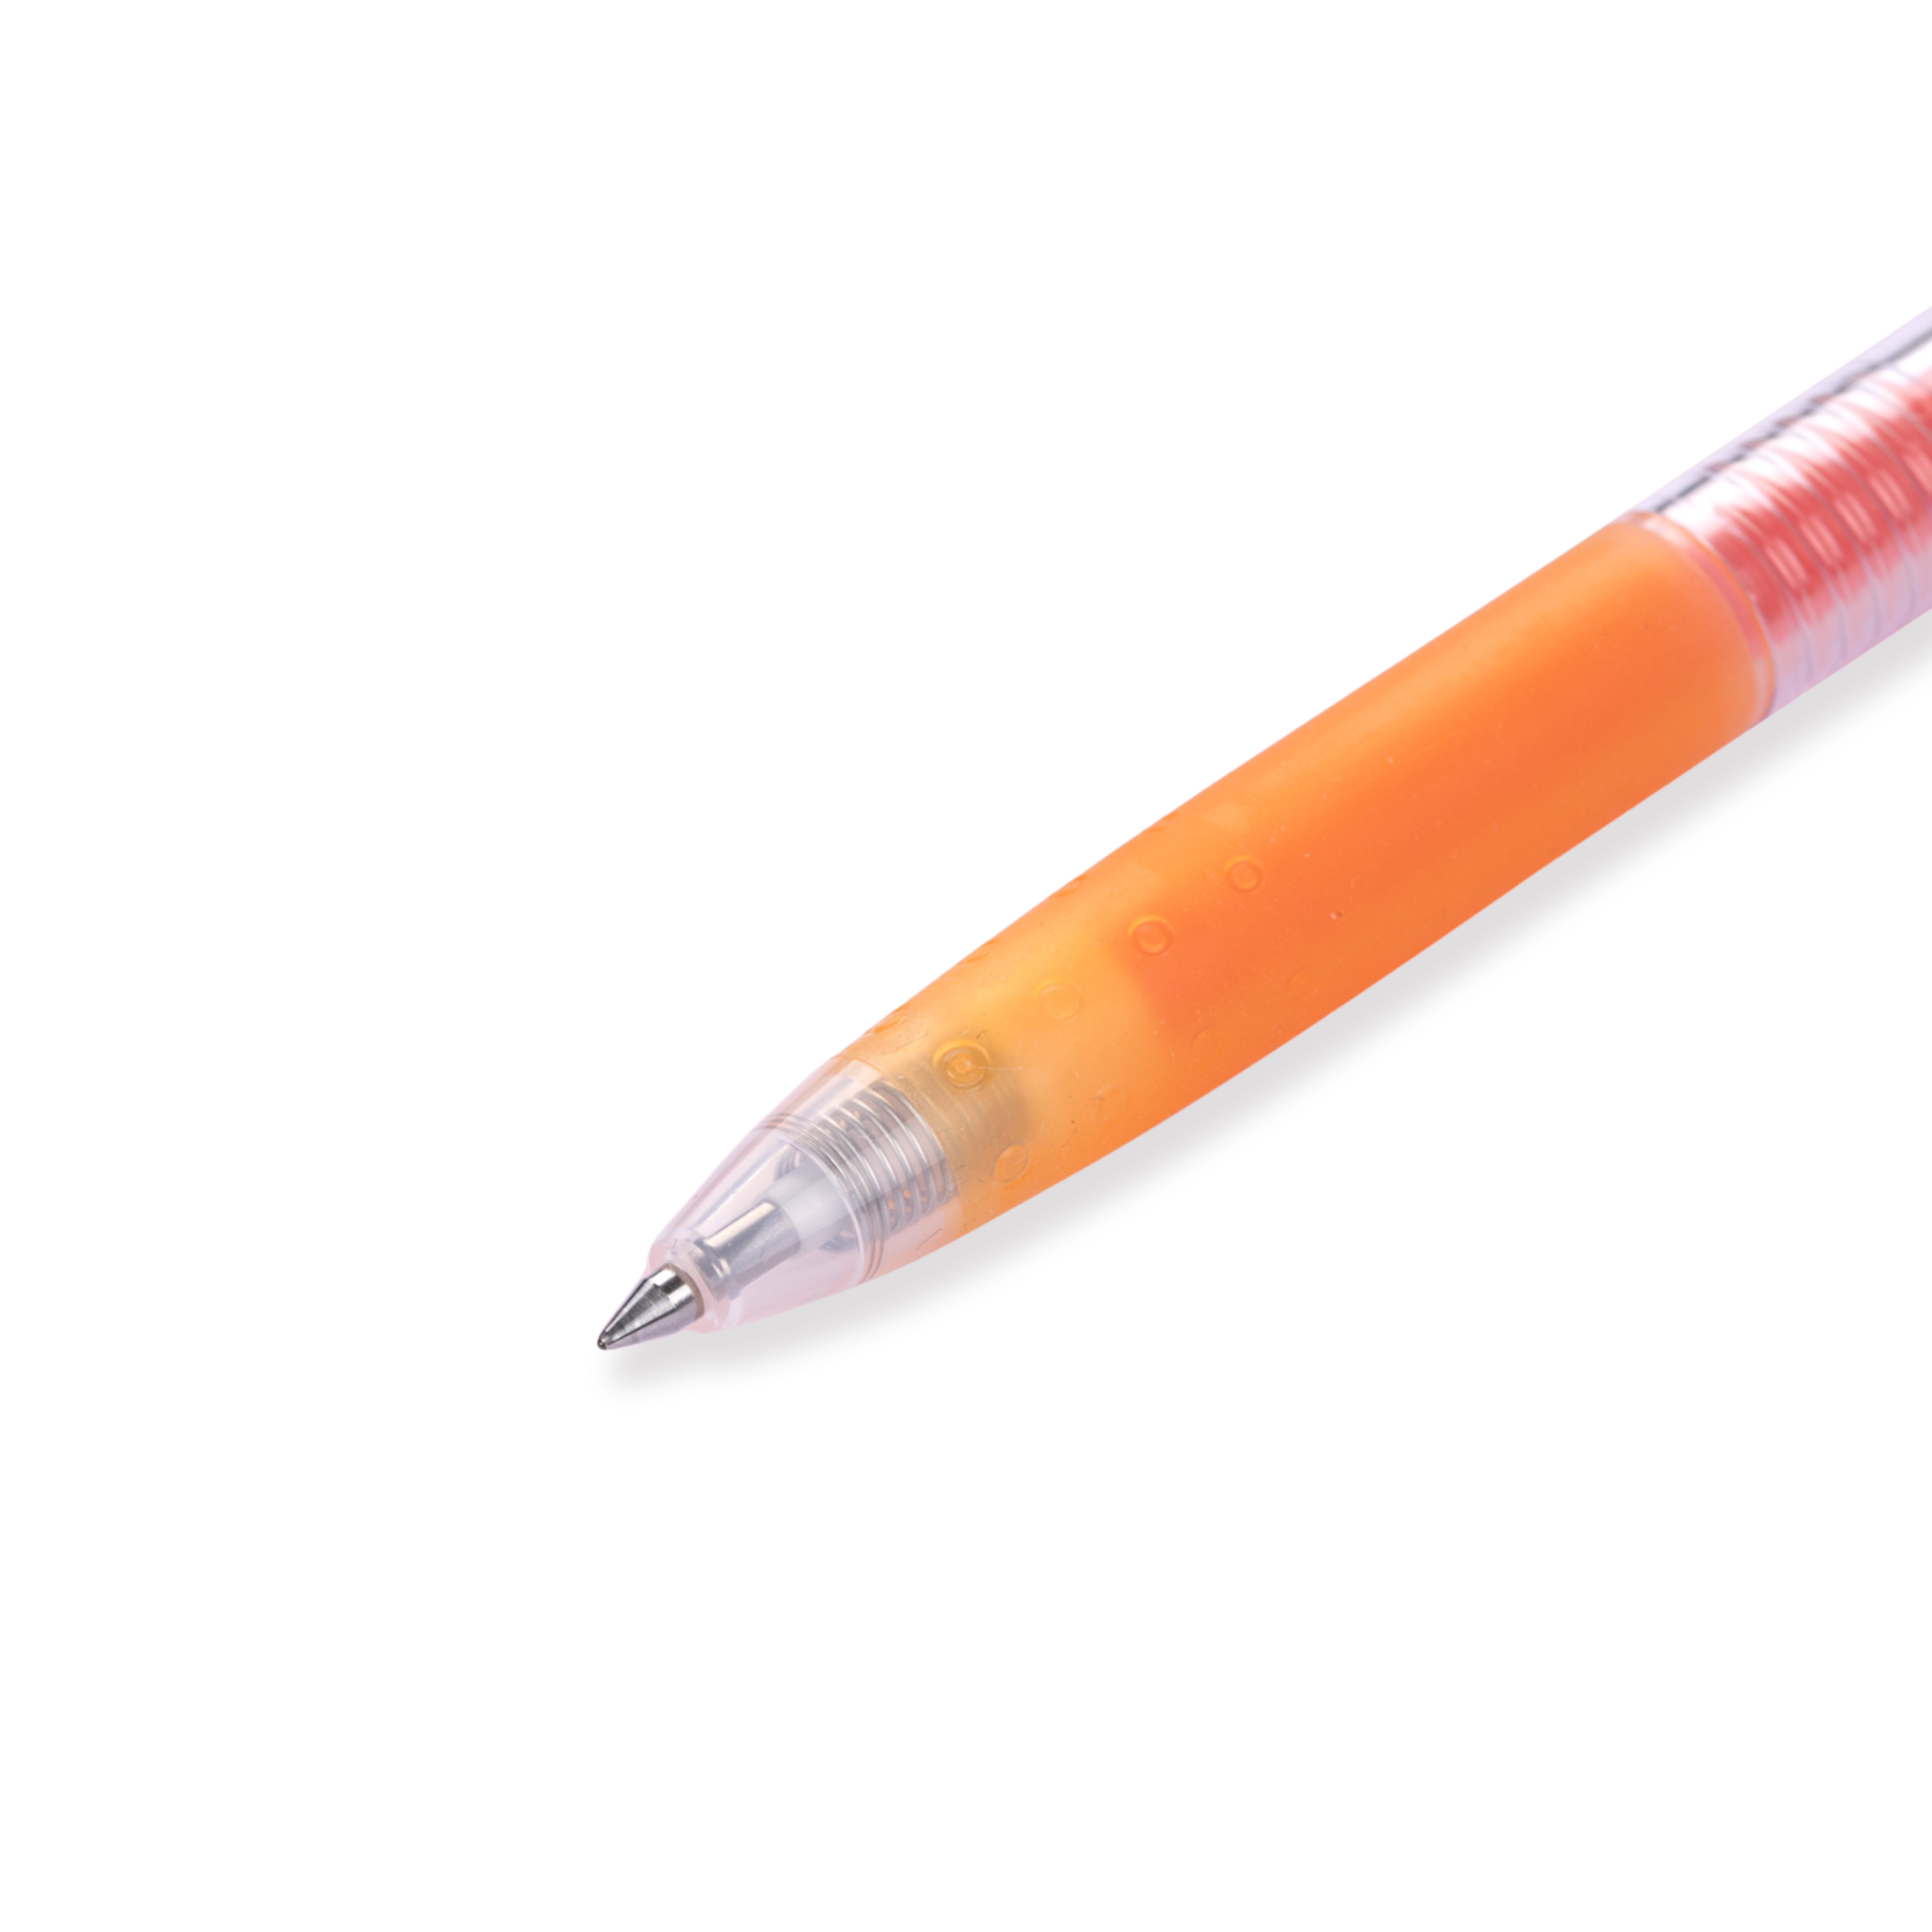 Pilot Juice Gel Pen - 0.5 mm - Apricot Orange - Stationery Pal